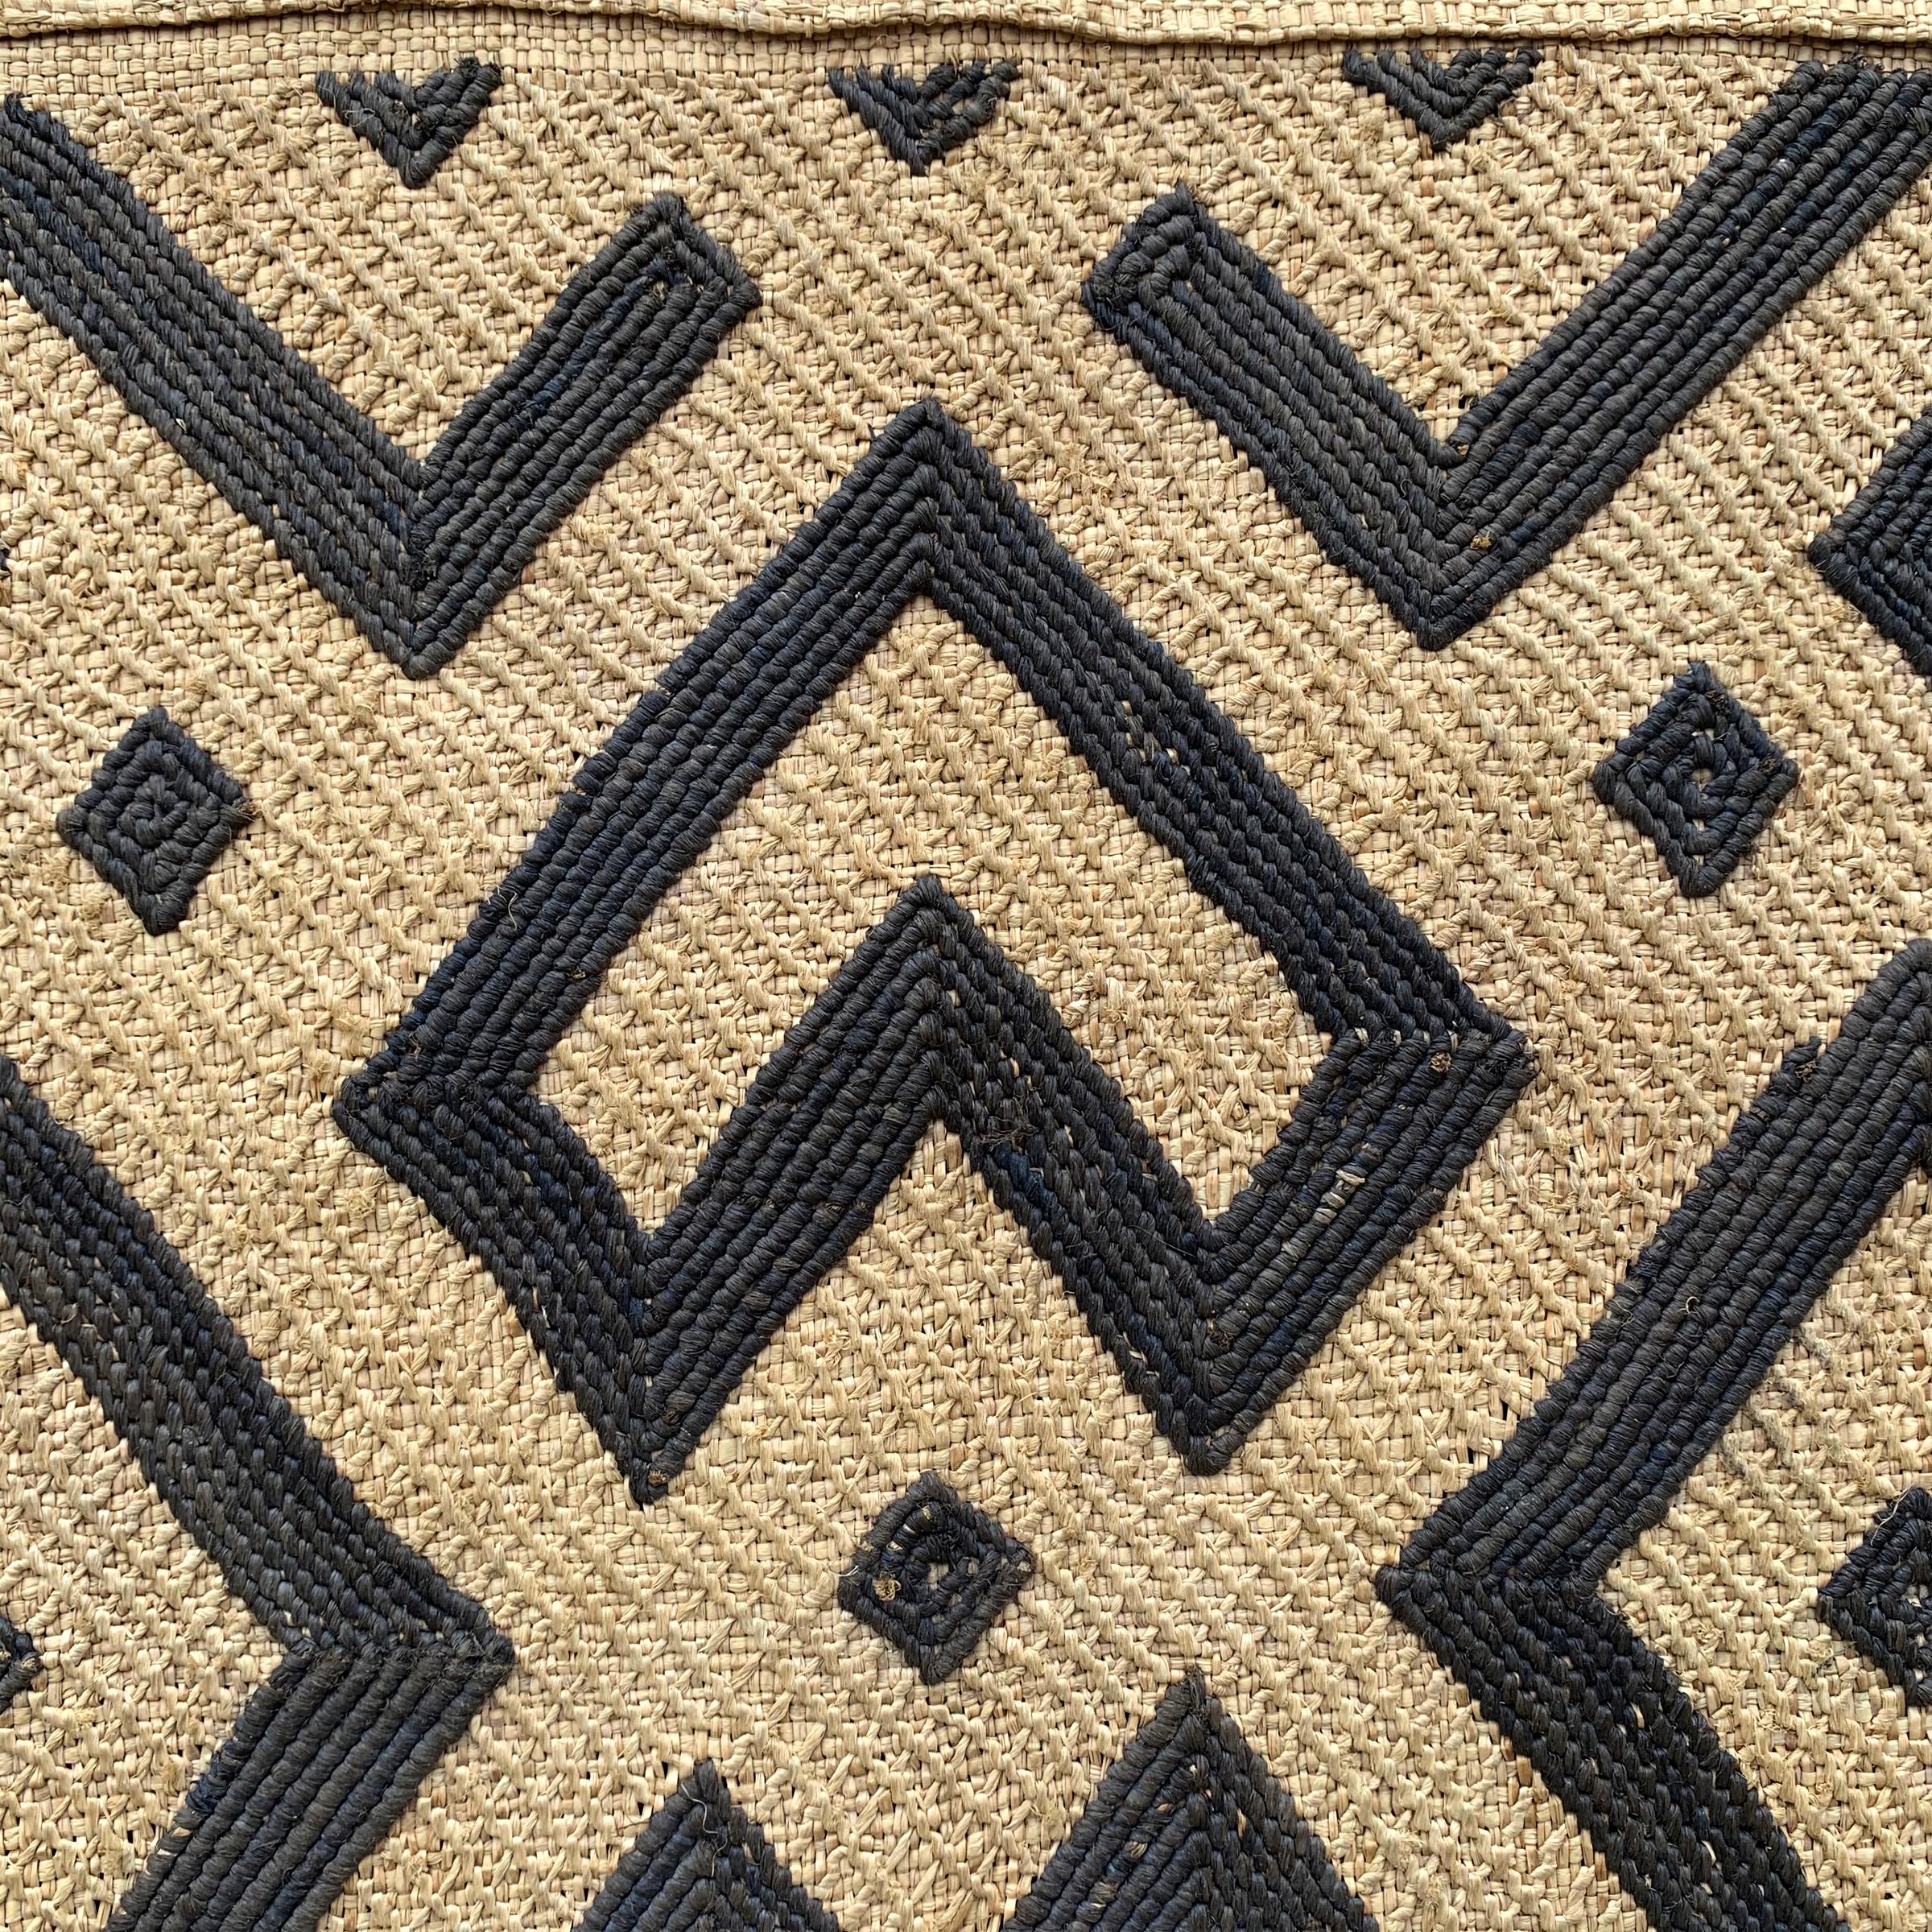 20th Century Mounted Kuba Cloth Panel